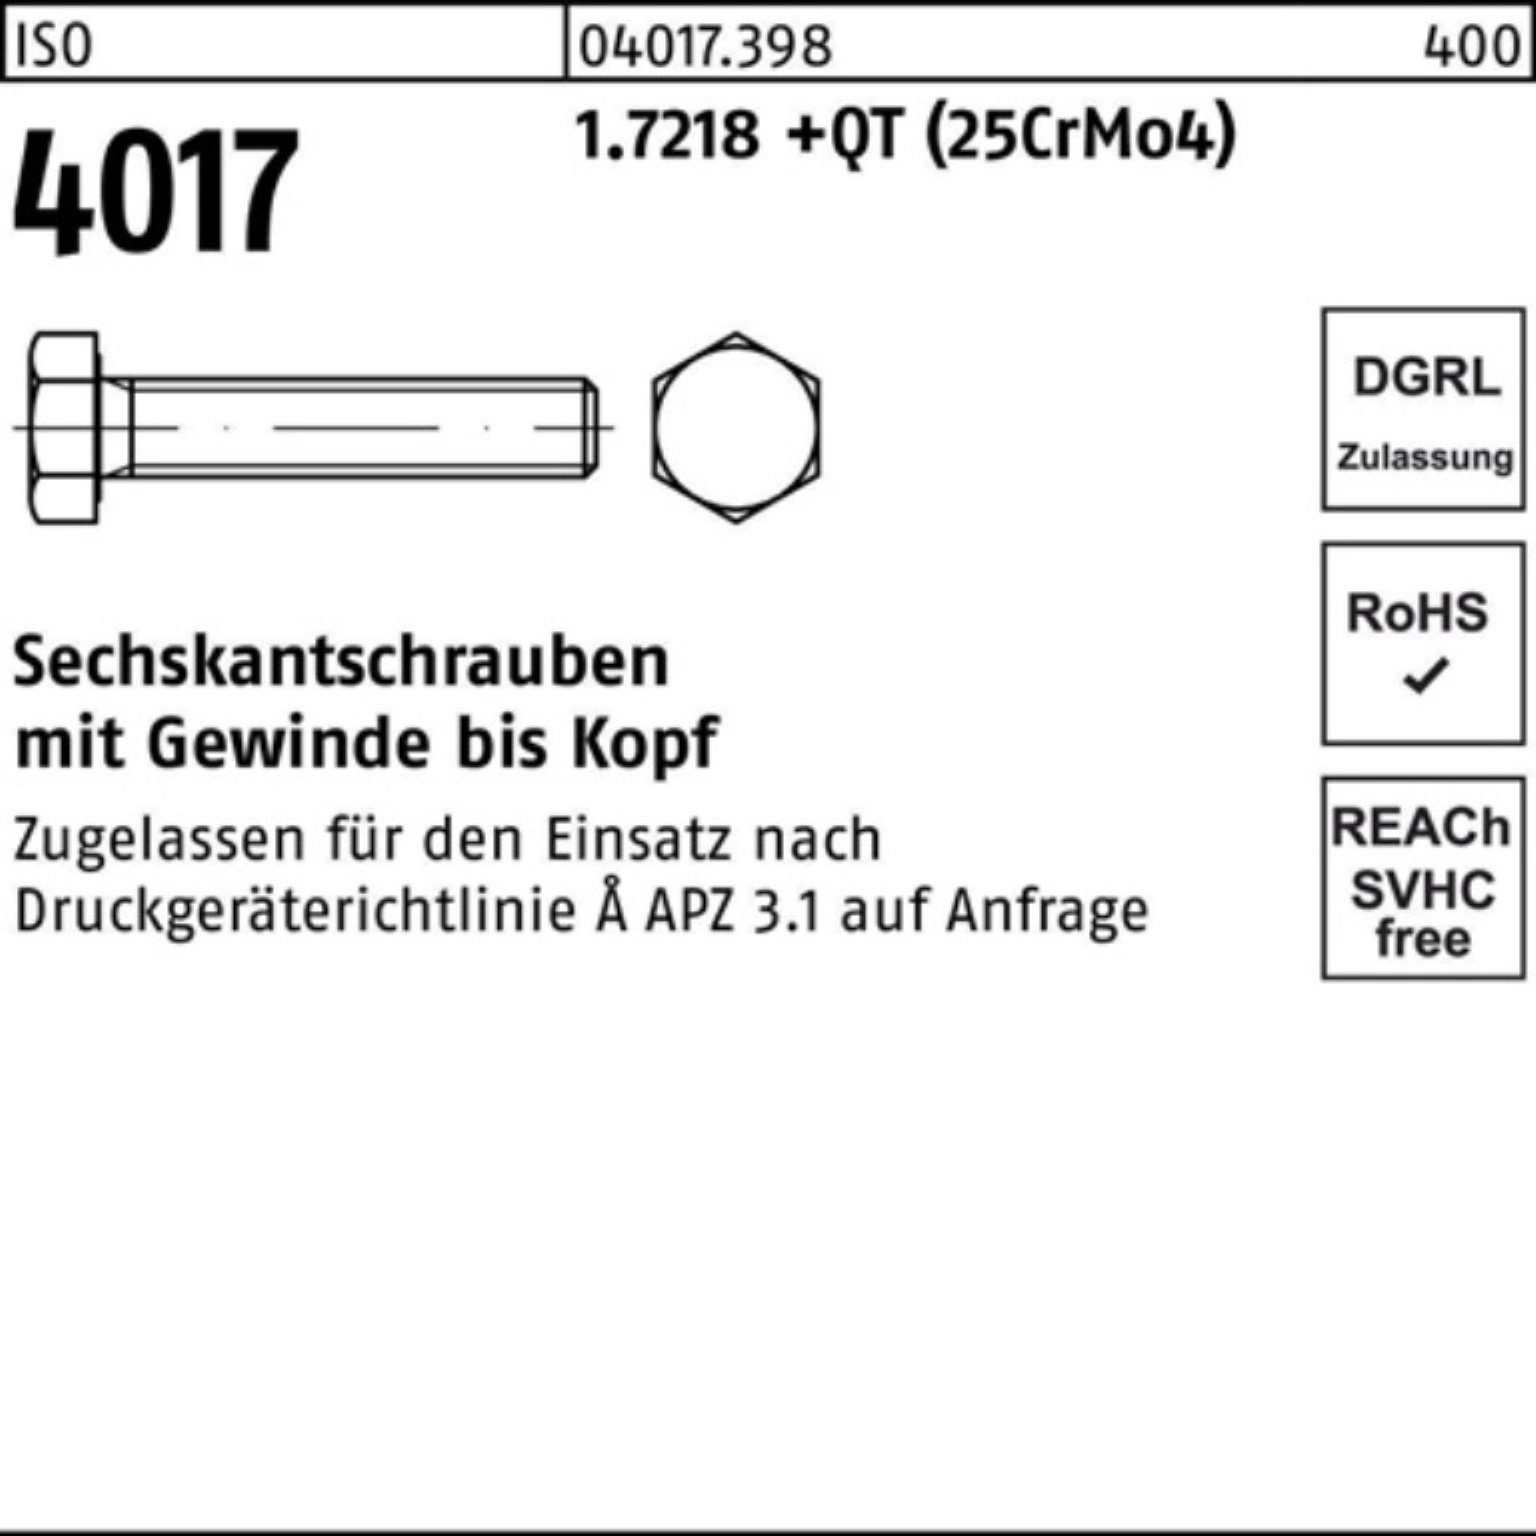 Pack Sechskantschraube Sechskantschraube 100er 4017 M30x VG ISO Bufab (25CrMo4) 1.7218 75 +QT